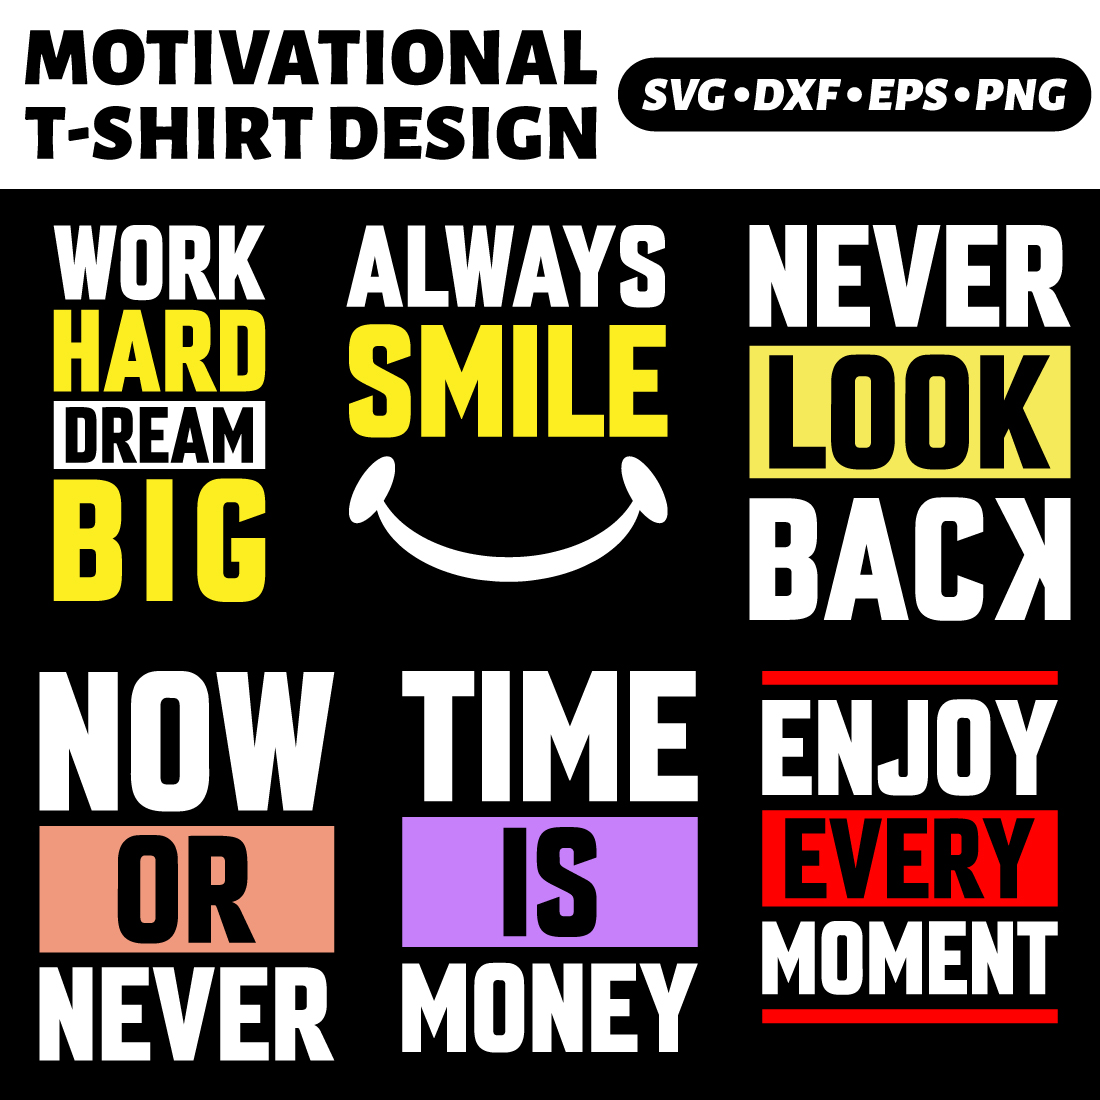 Motivational T-shirt Design Bundle cover image.